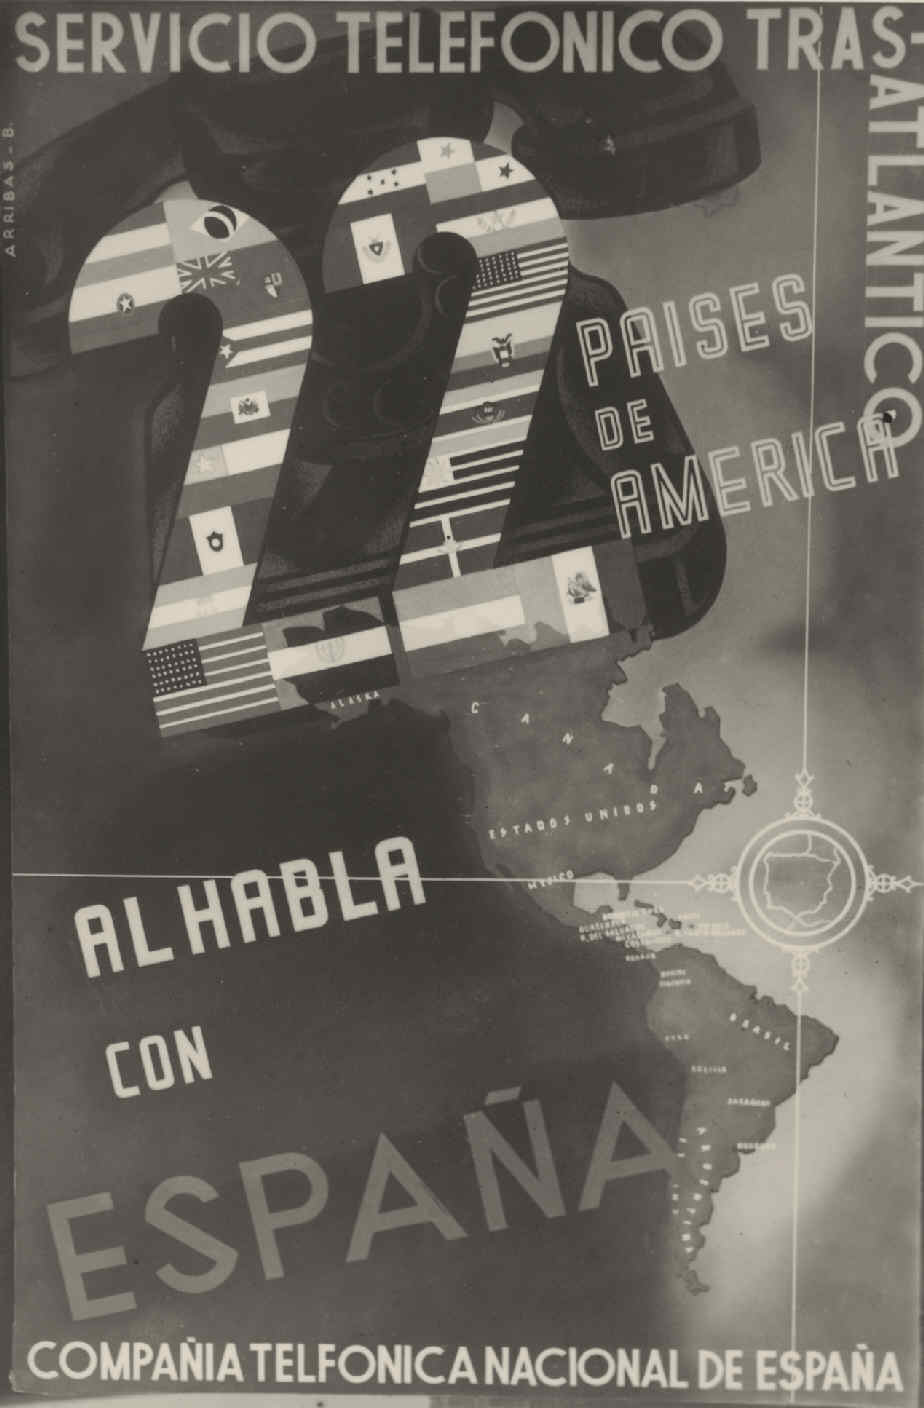 Transatlantic service posters.